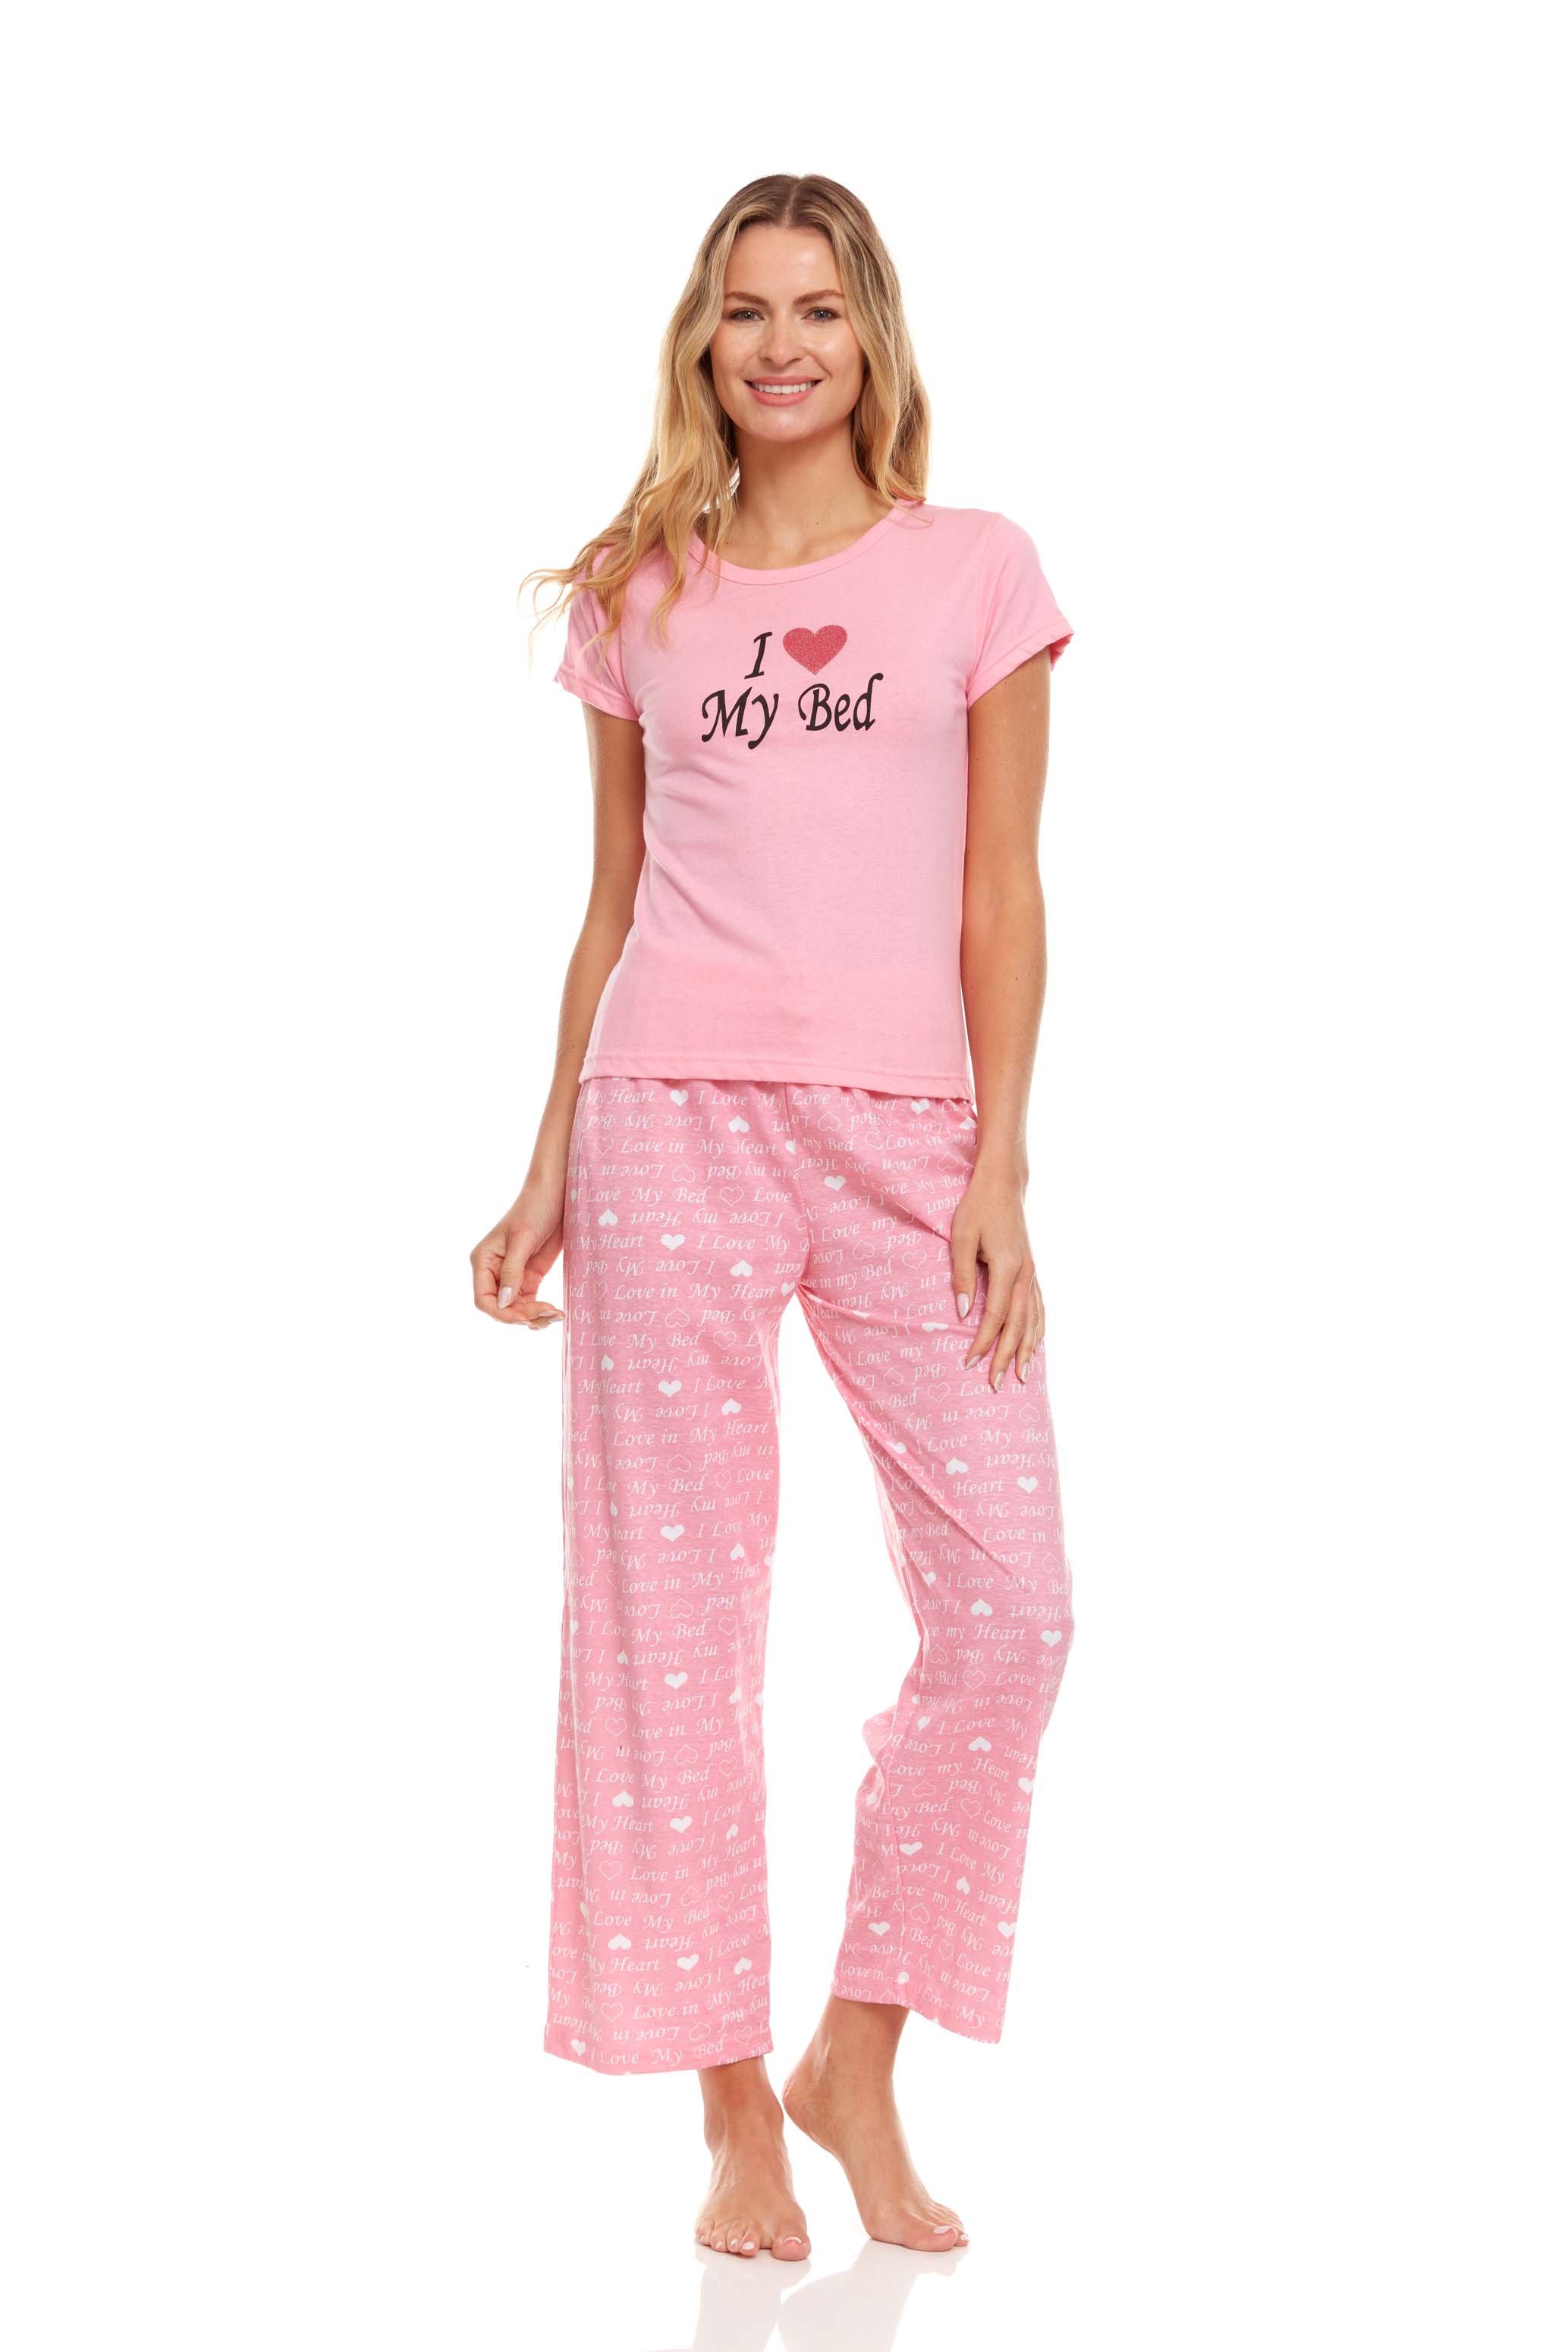 Lati Fashion 09P Womens Pants Set Sleepwear Pajamas Woman Short Sleeve Sleep Nightshirt